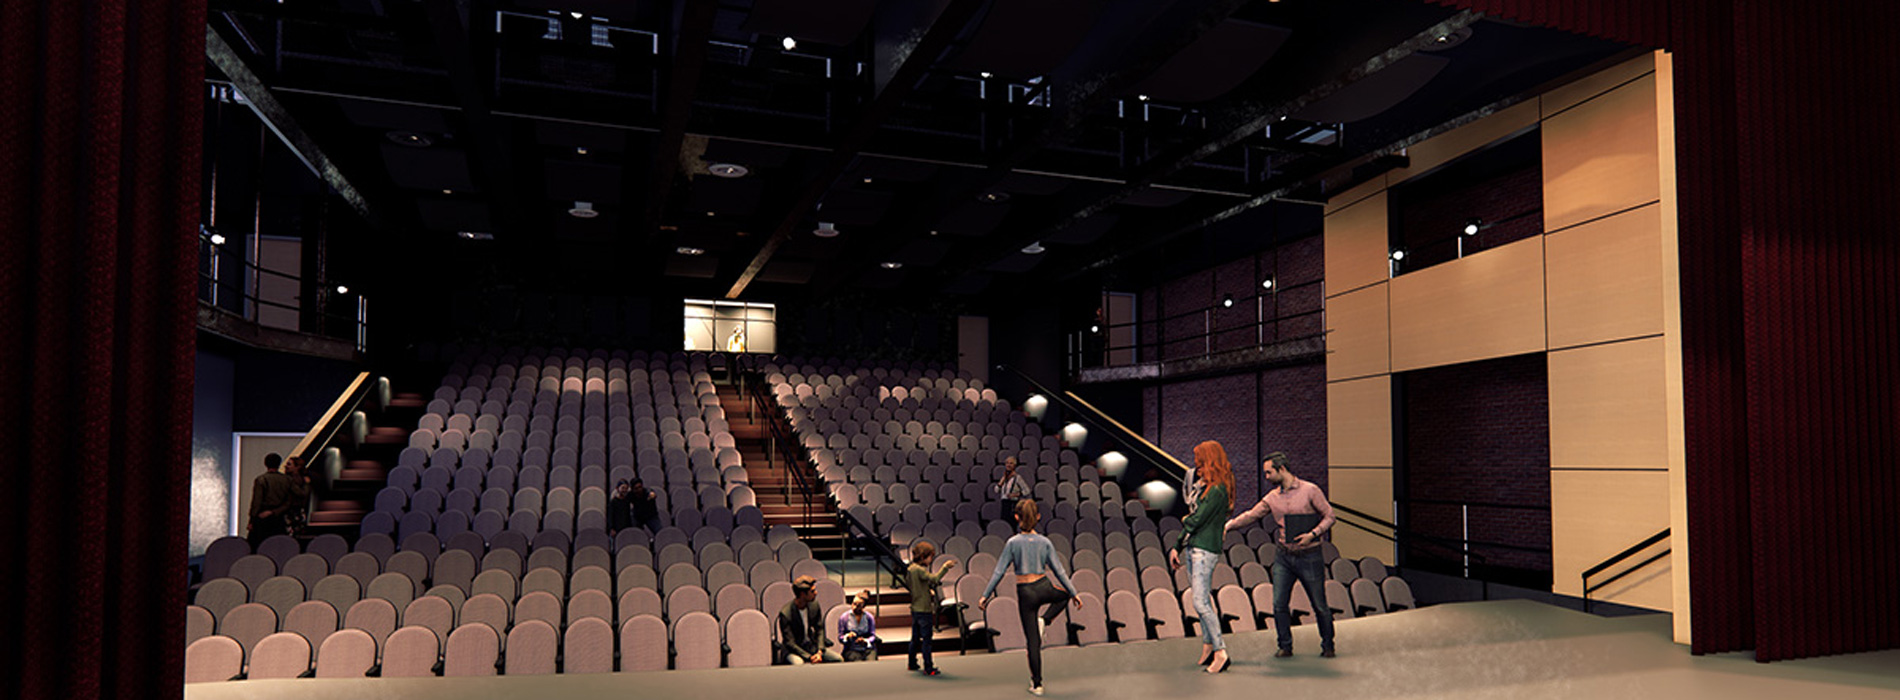 Winooski Schools performing arts center